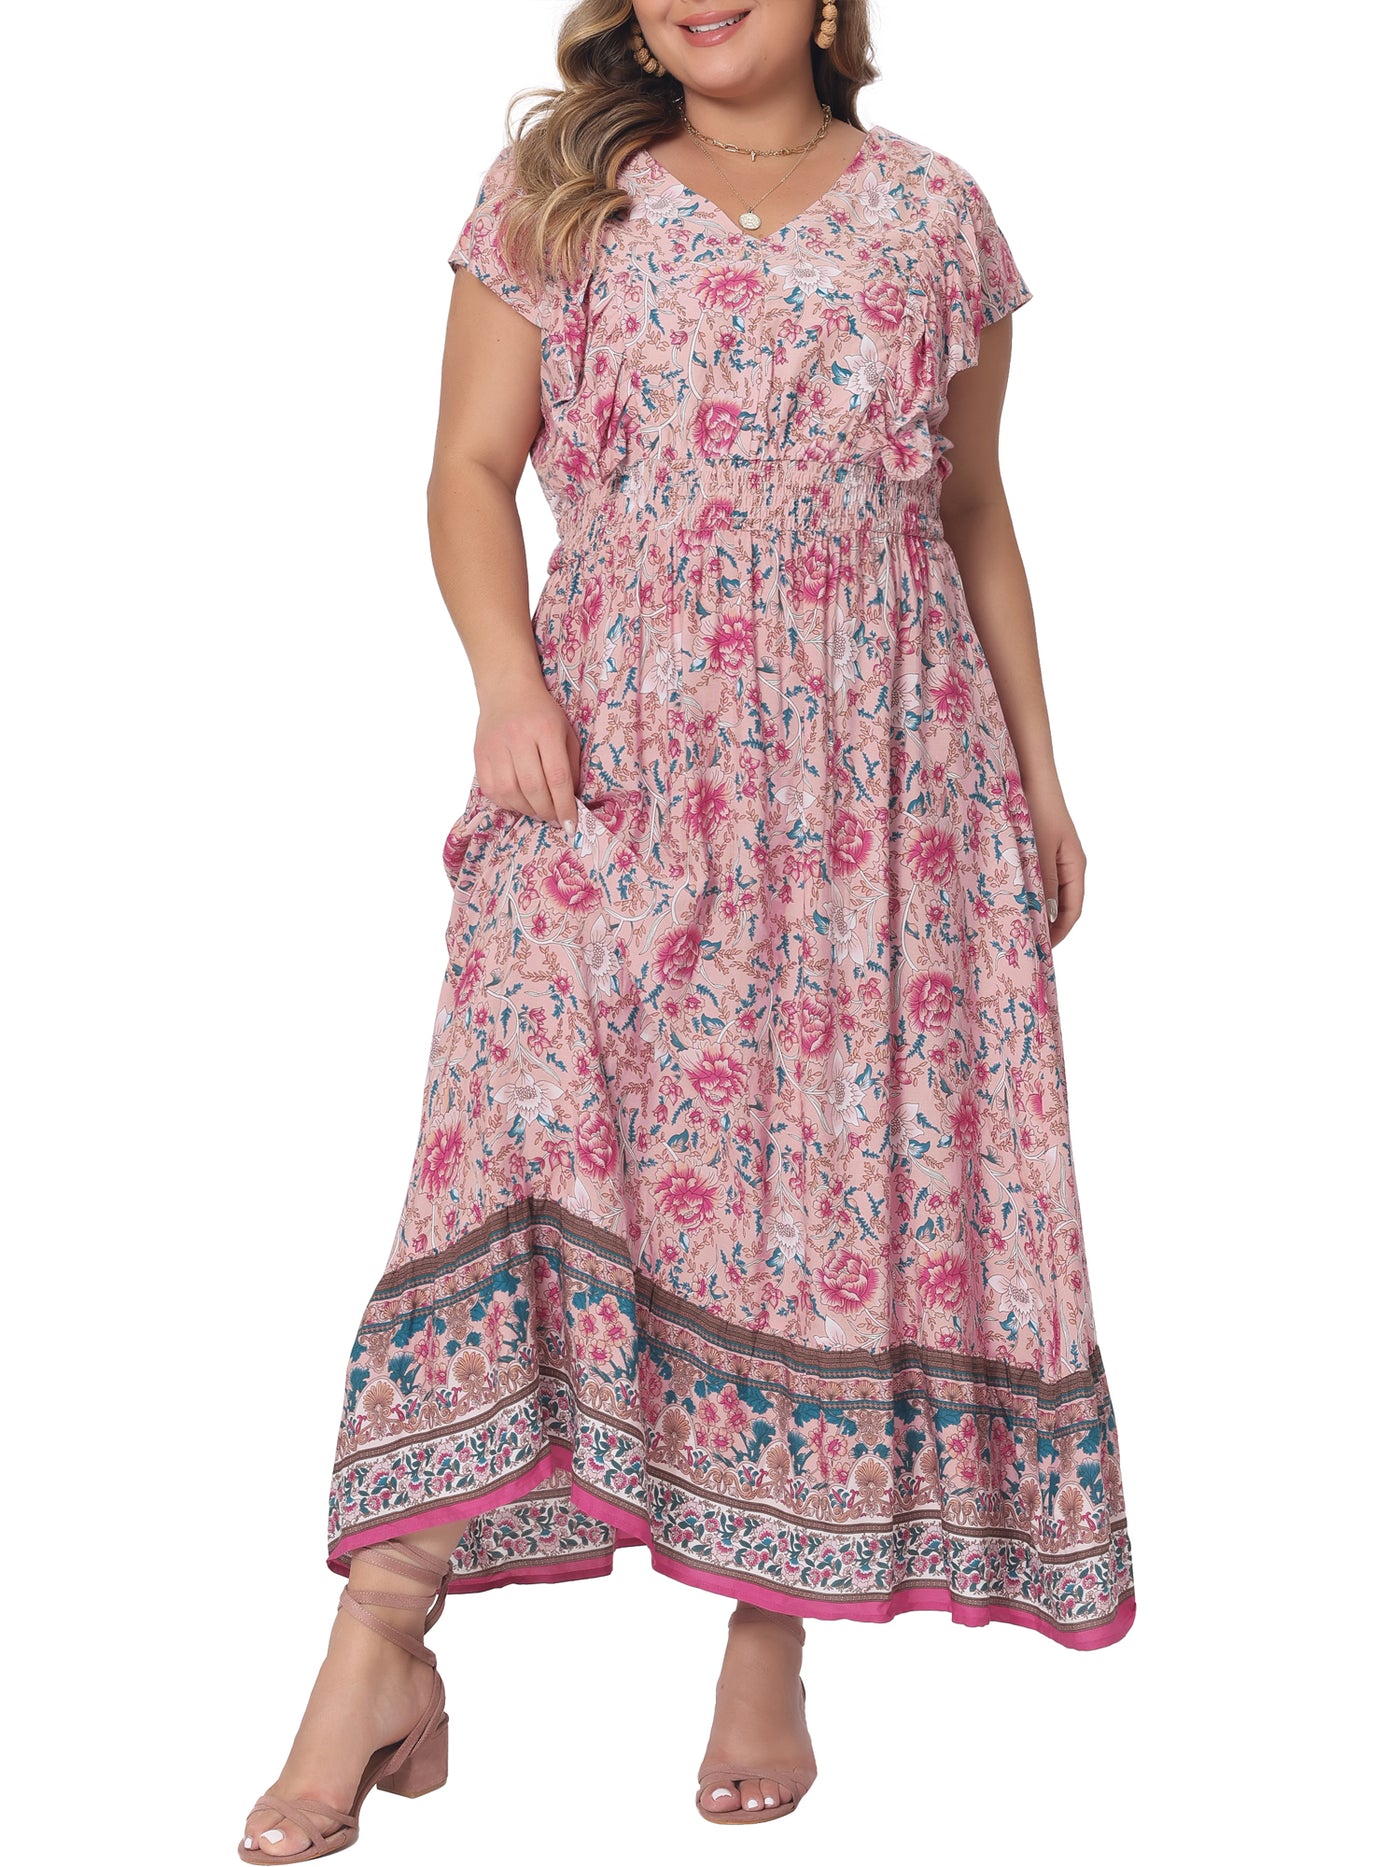 Bublédon Plus Size Dress for Women Bohemian Floral V Neck Ruffle Sleeve Summer Beach Casual Boho Maxi Dresses